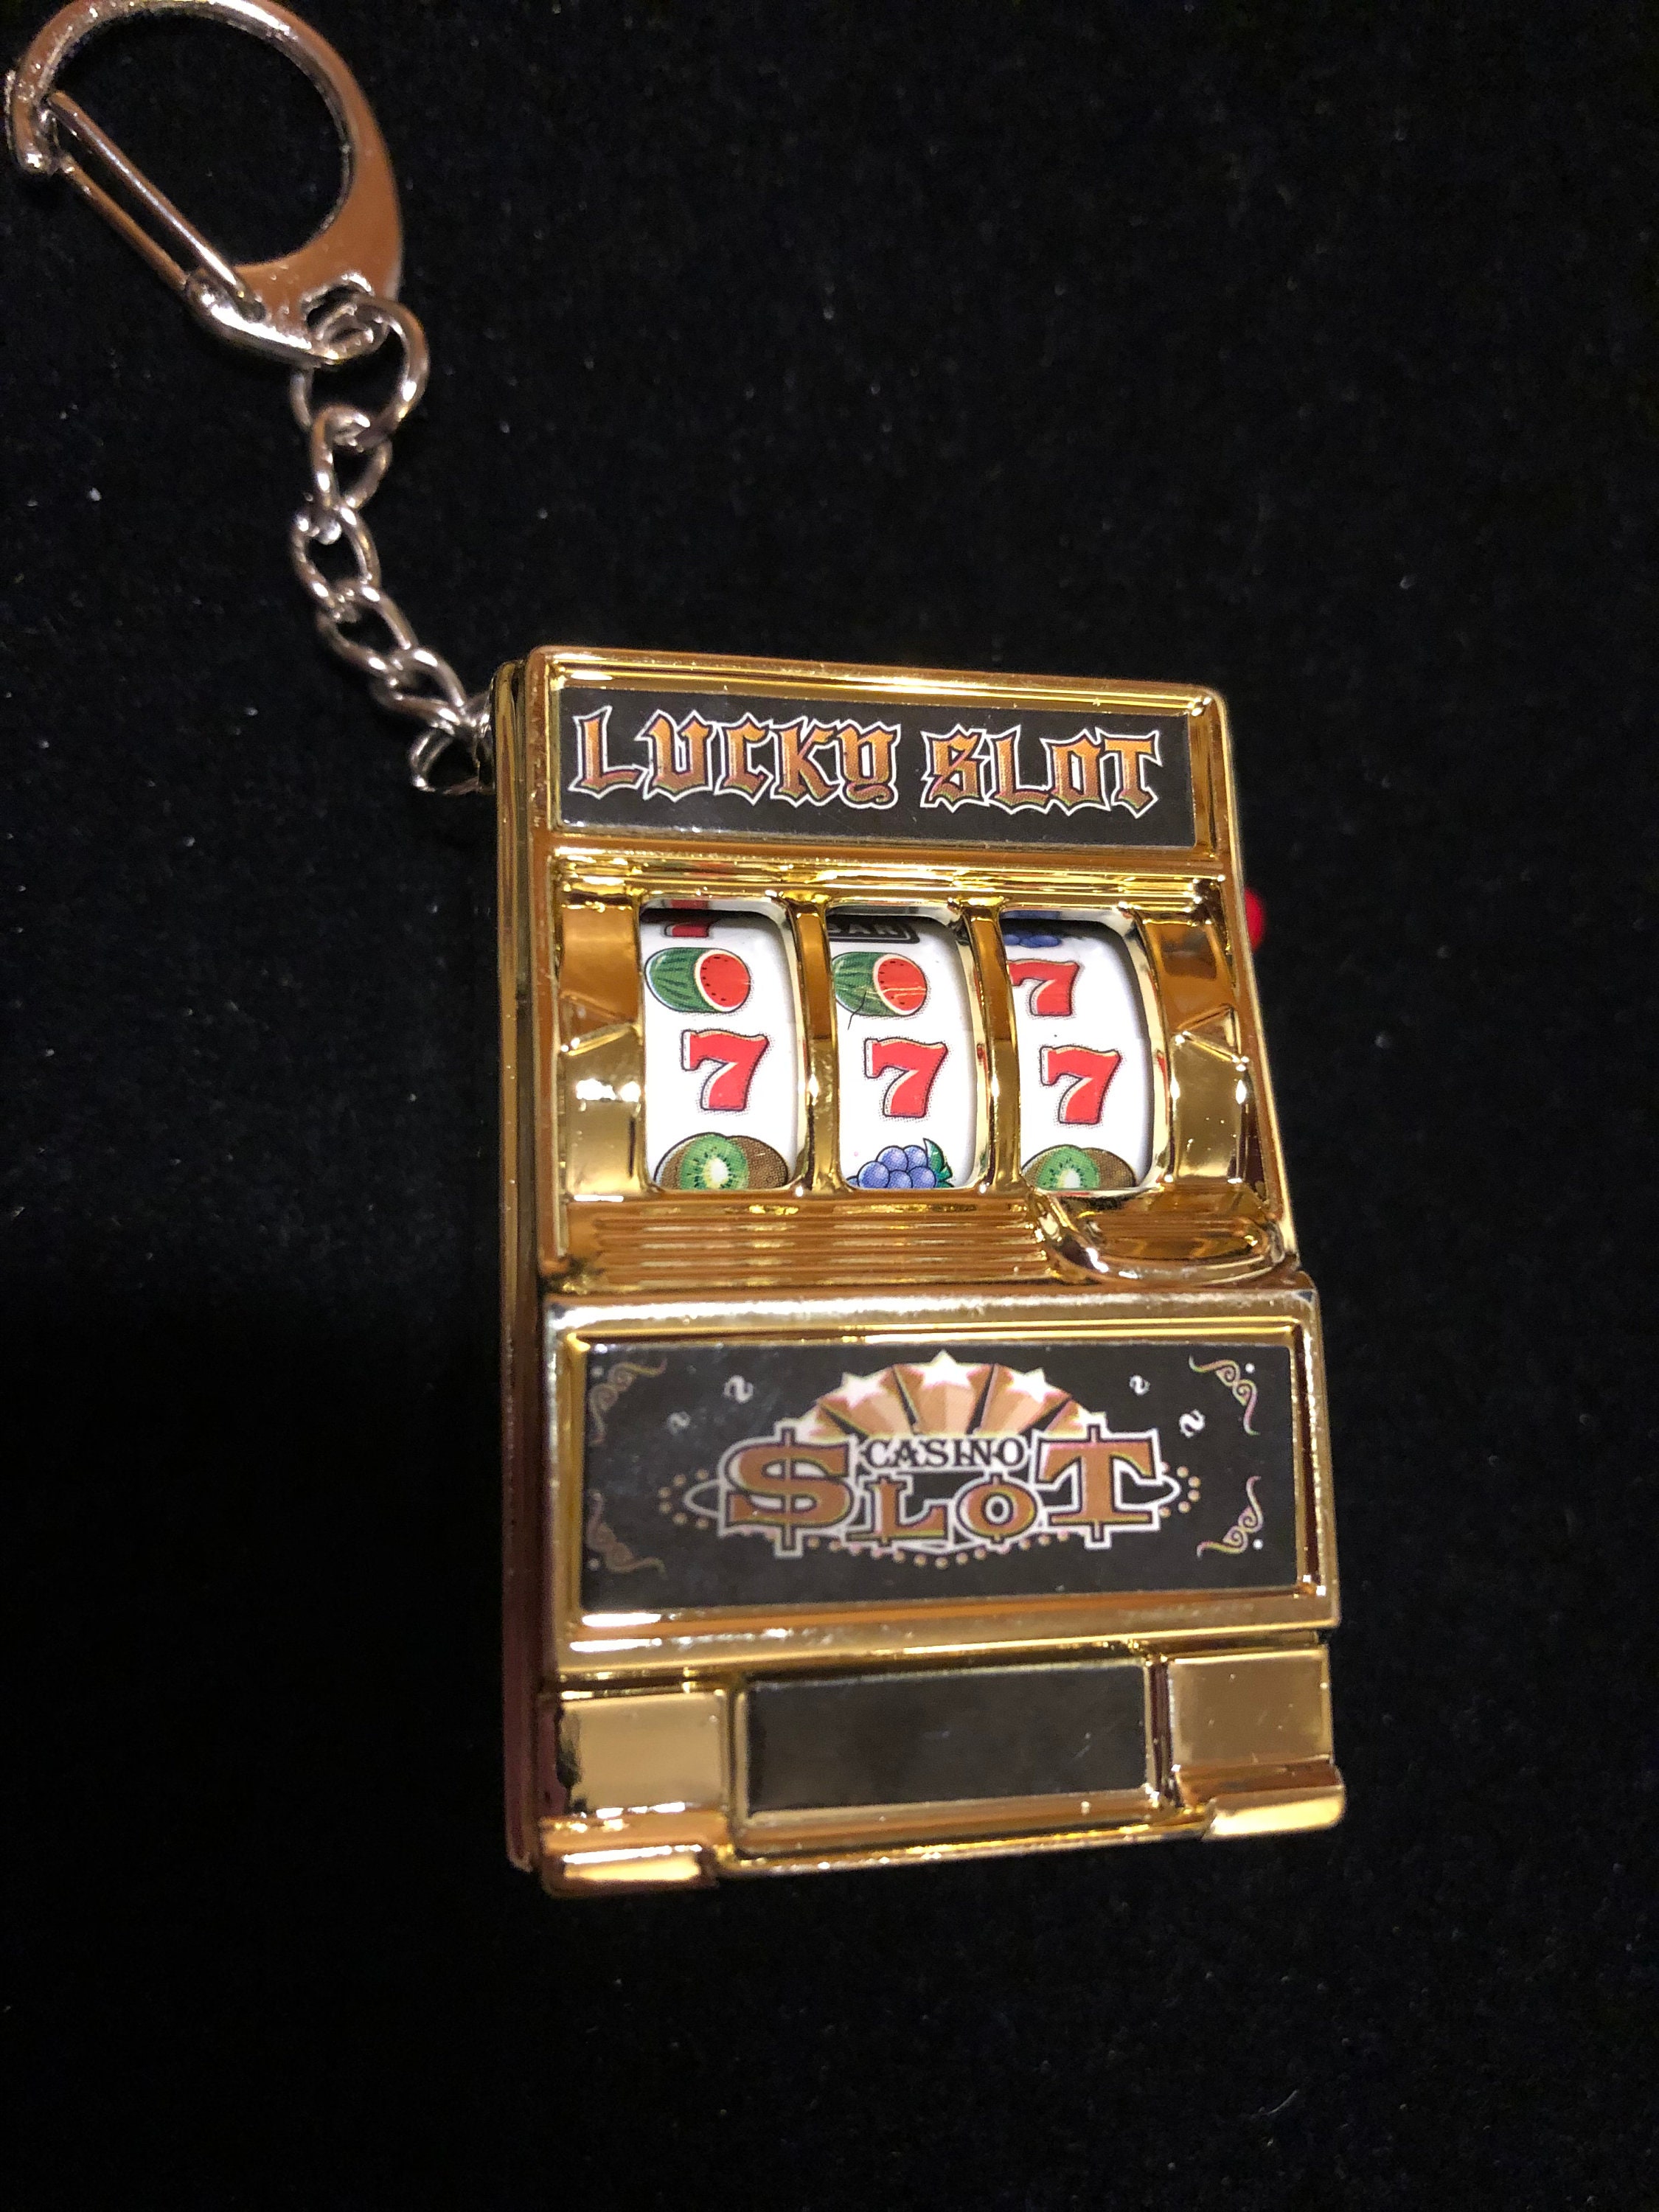 777 Las Vegas Jumbo Slot Machine Casino Toy Piggy Bank Replica with Flashing Lights and Jackpot Alert Sounds and Free Working Gold Slot Keychain